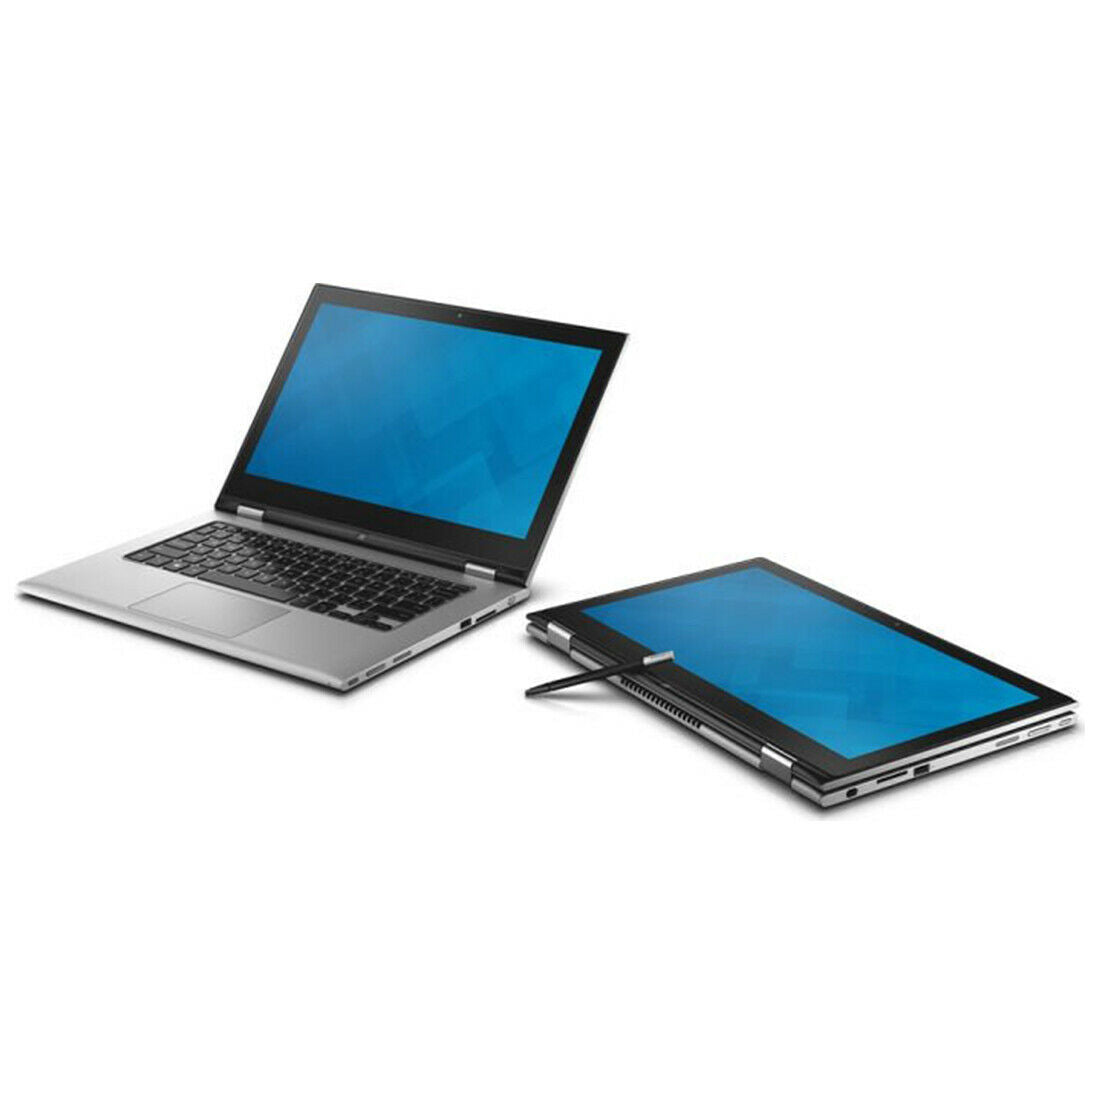 Dell Inspiron 13 7000 13" Notebook Laptop i7-6500U 8GB 2.2GHz SSD 119GB, Silver